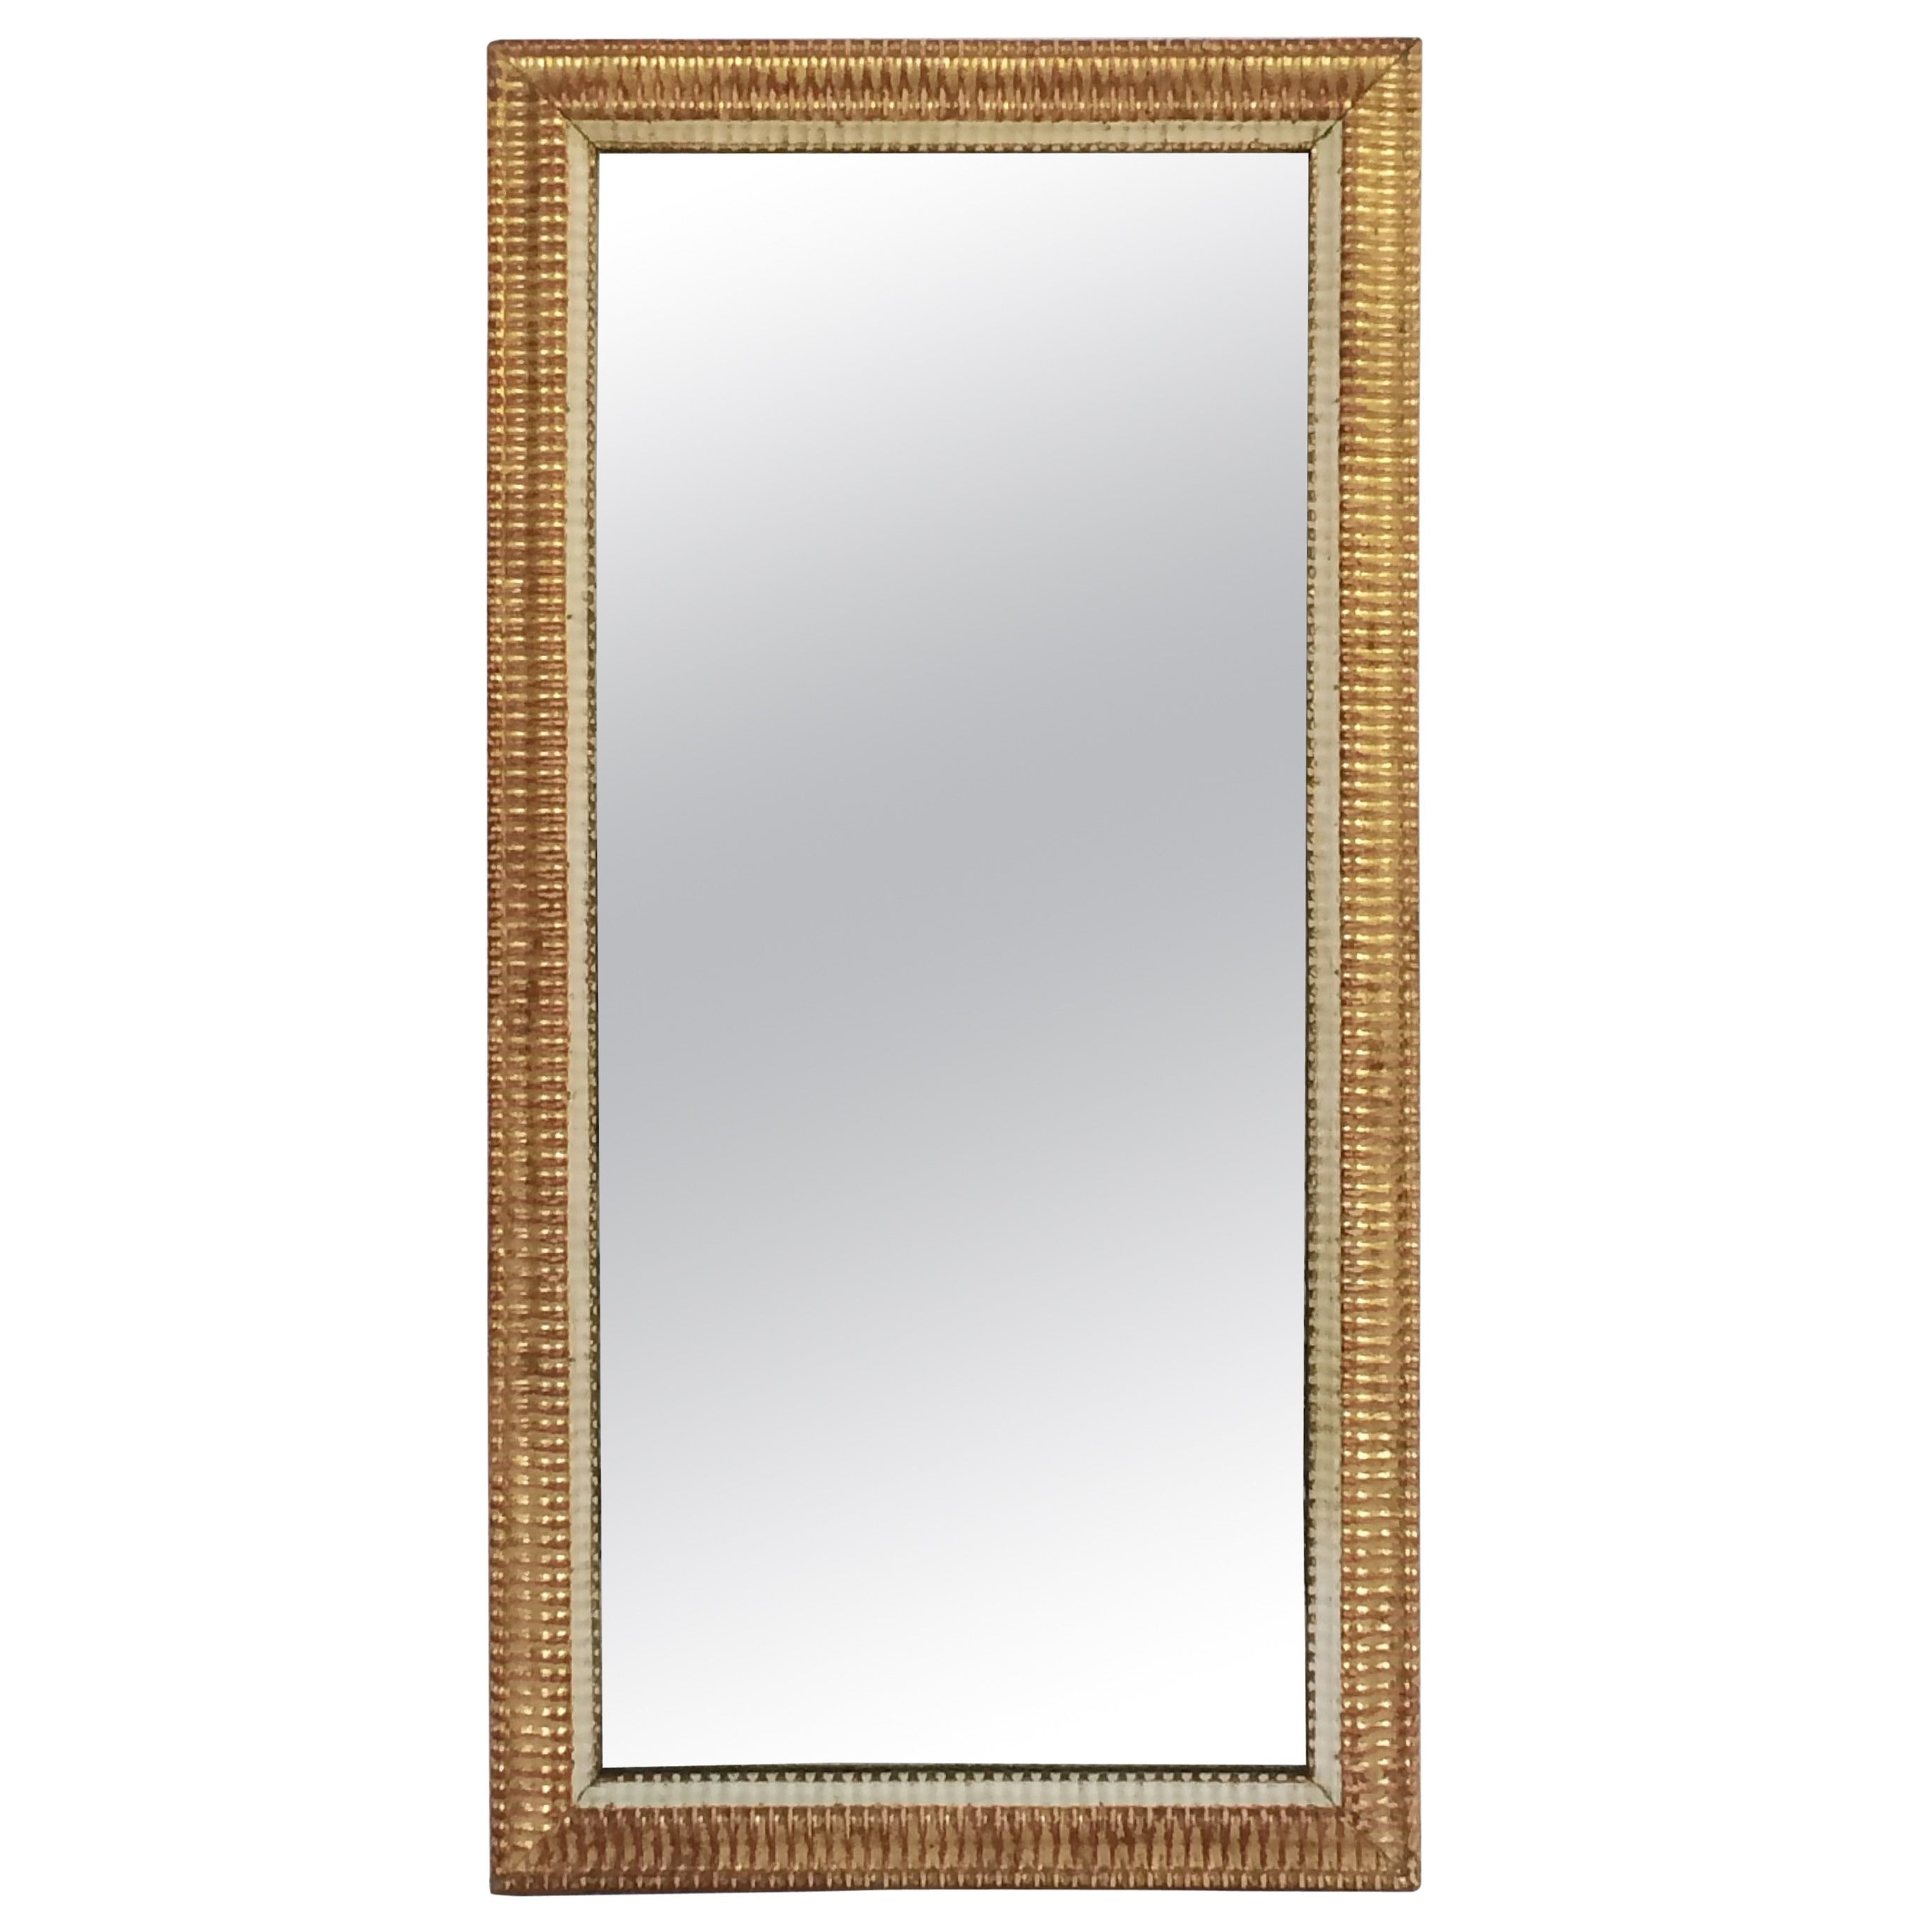 Large French Gilt Rectangular Wall Mirror (52 1/2" x 26 1/2")